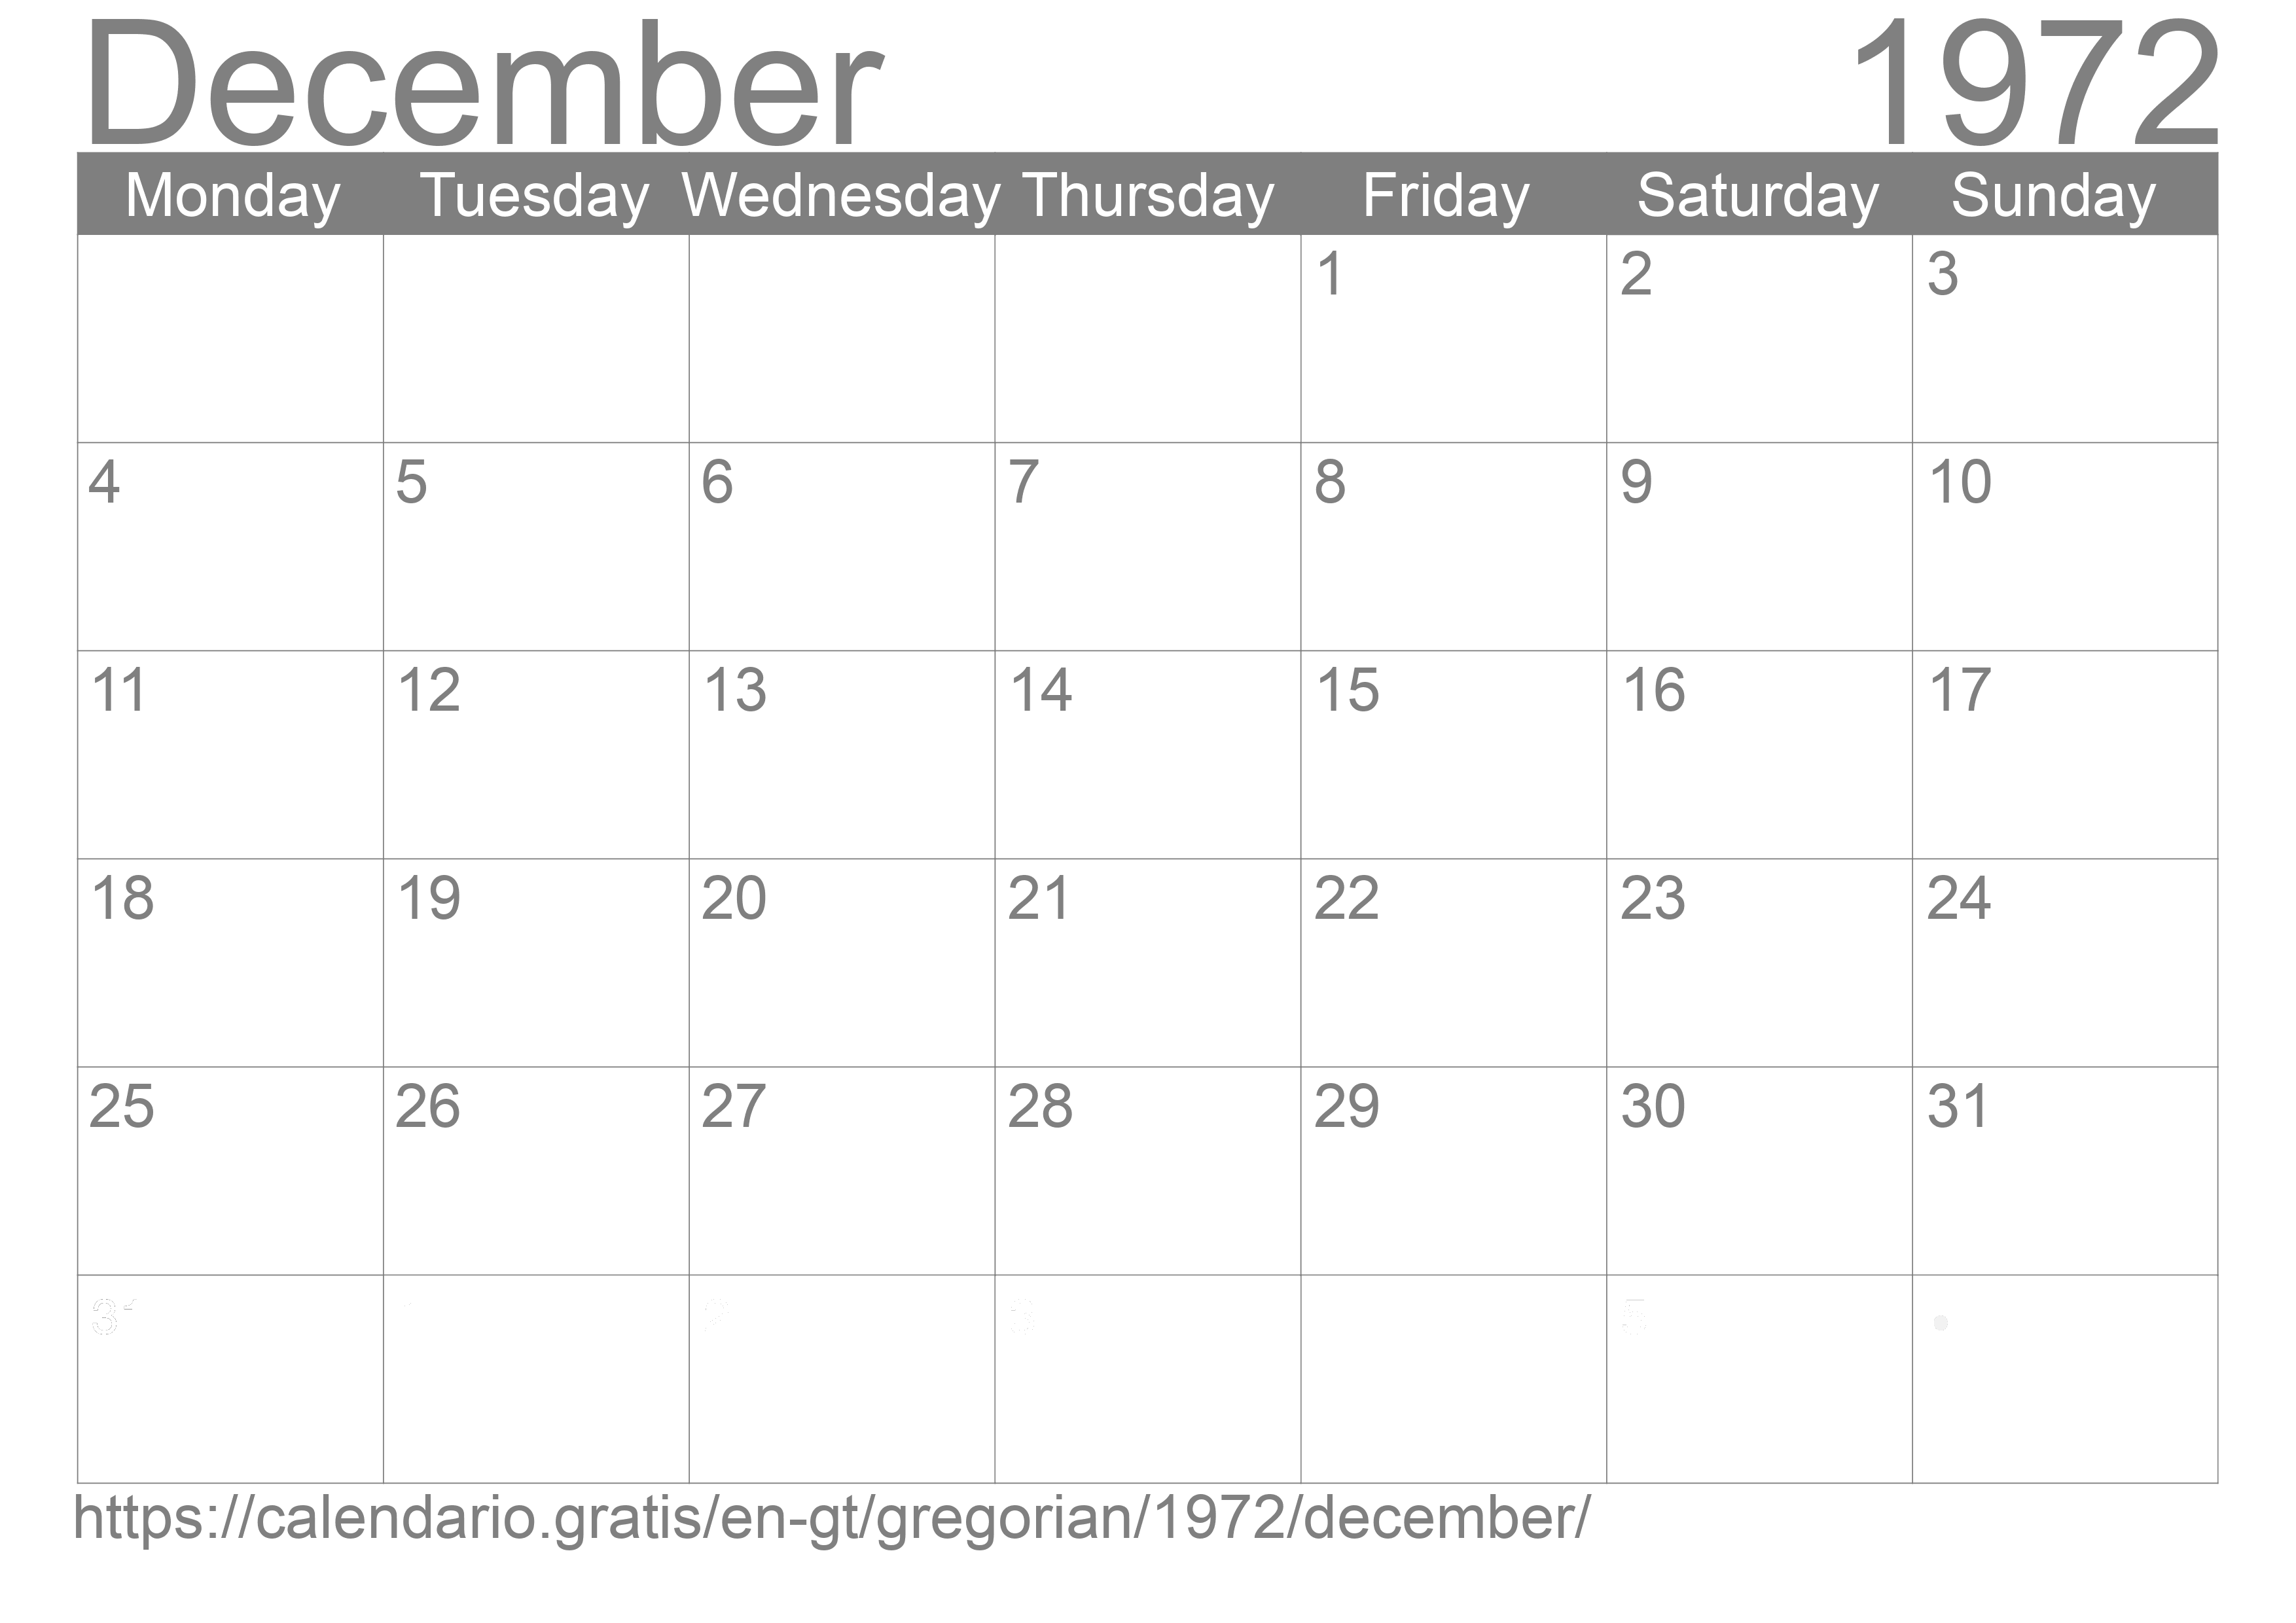 Calendar December 1972 to print